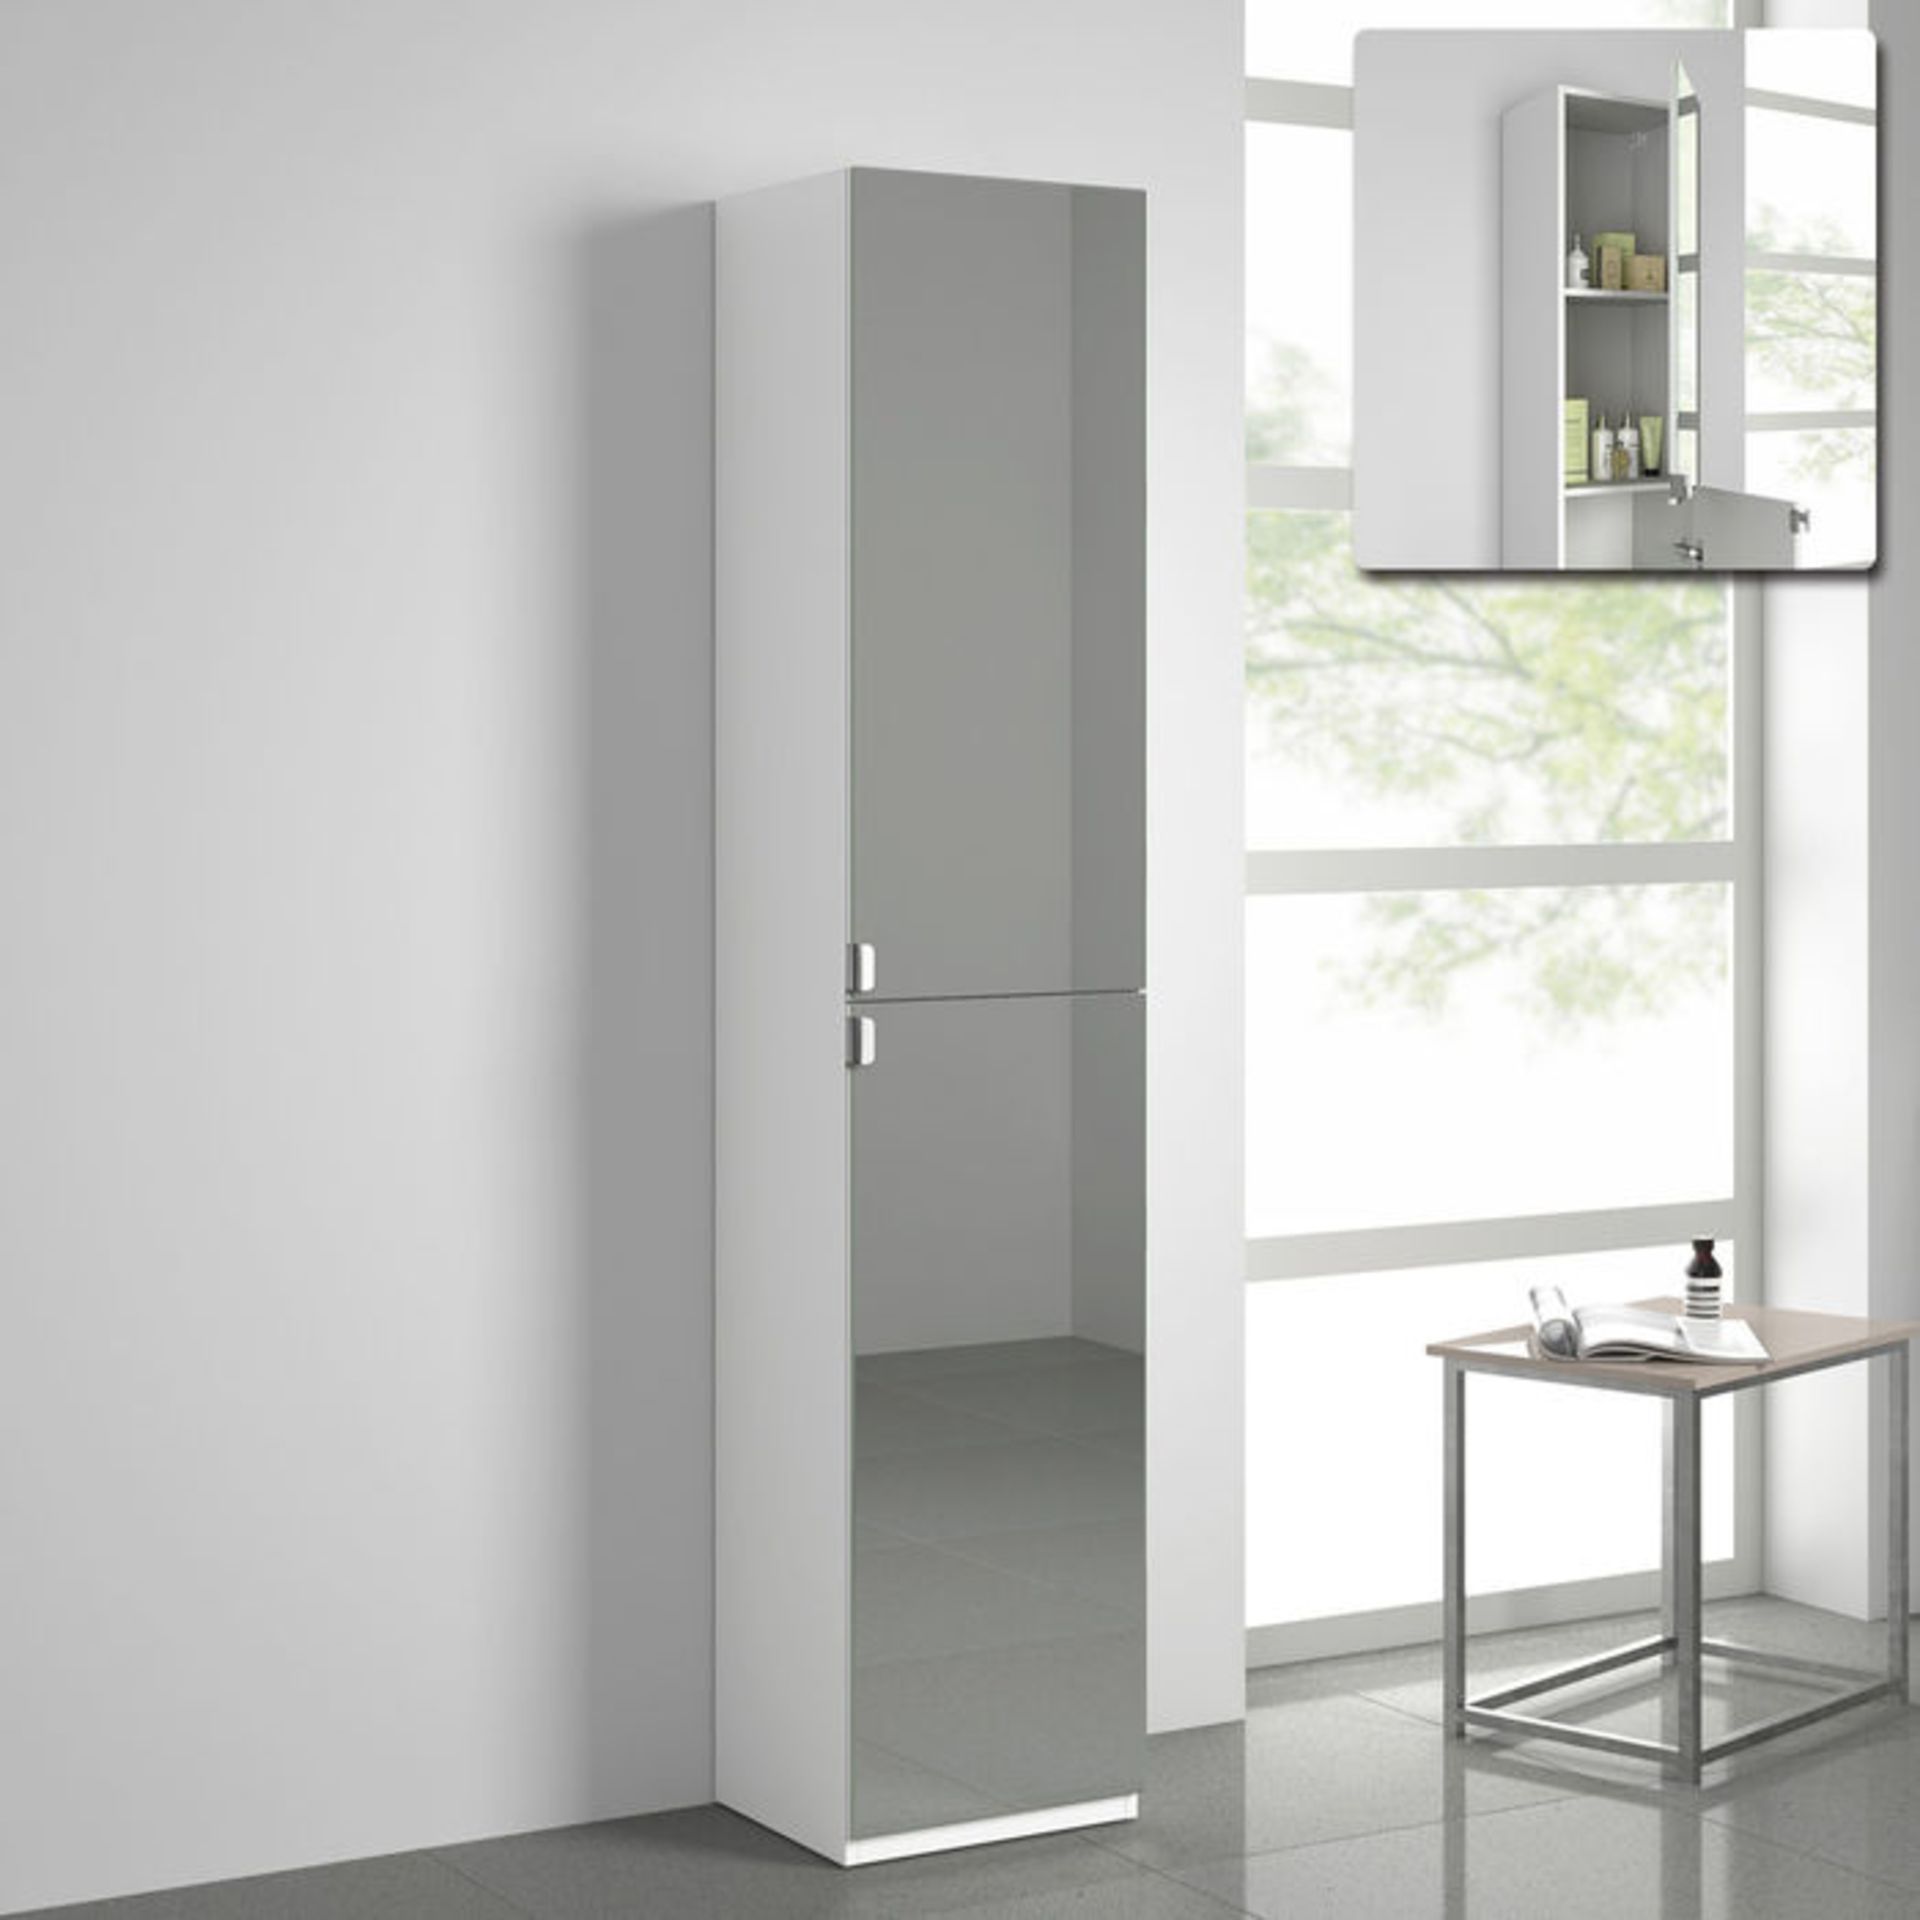 (NY183) 1700x350mm Mirrored Door Matte White Tall Storage Cabinet - Floor Standing. Enjoy the